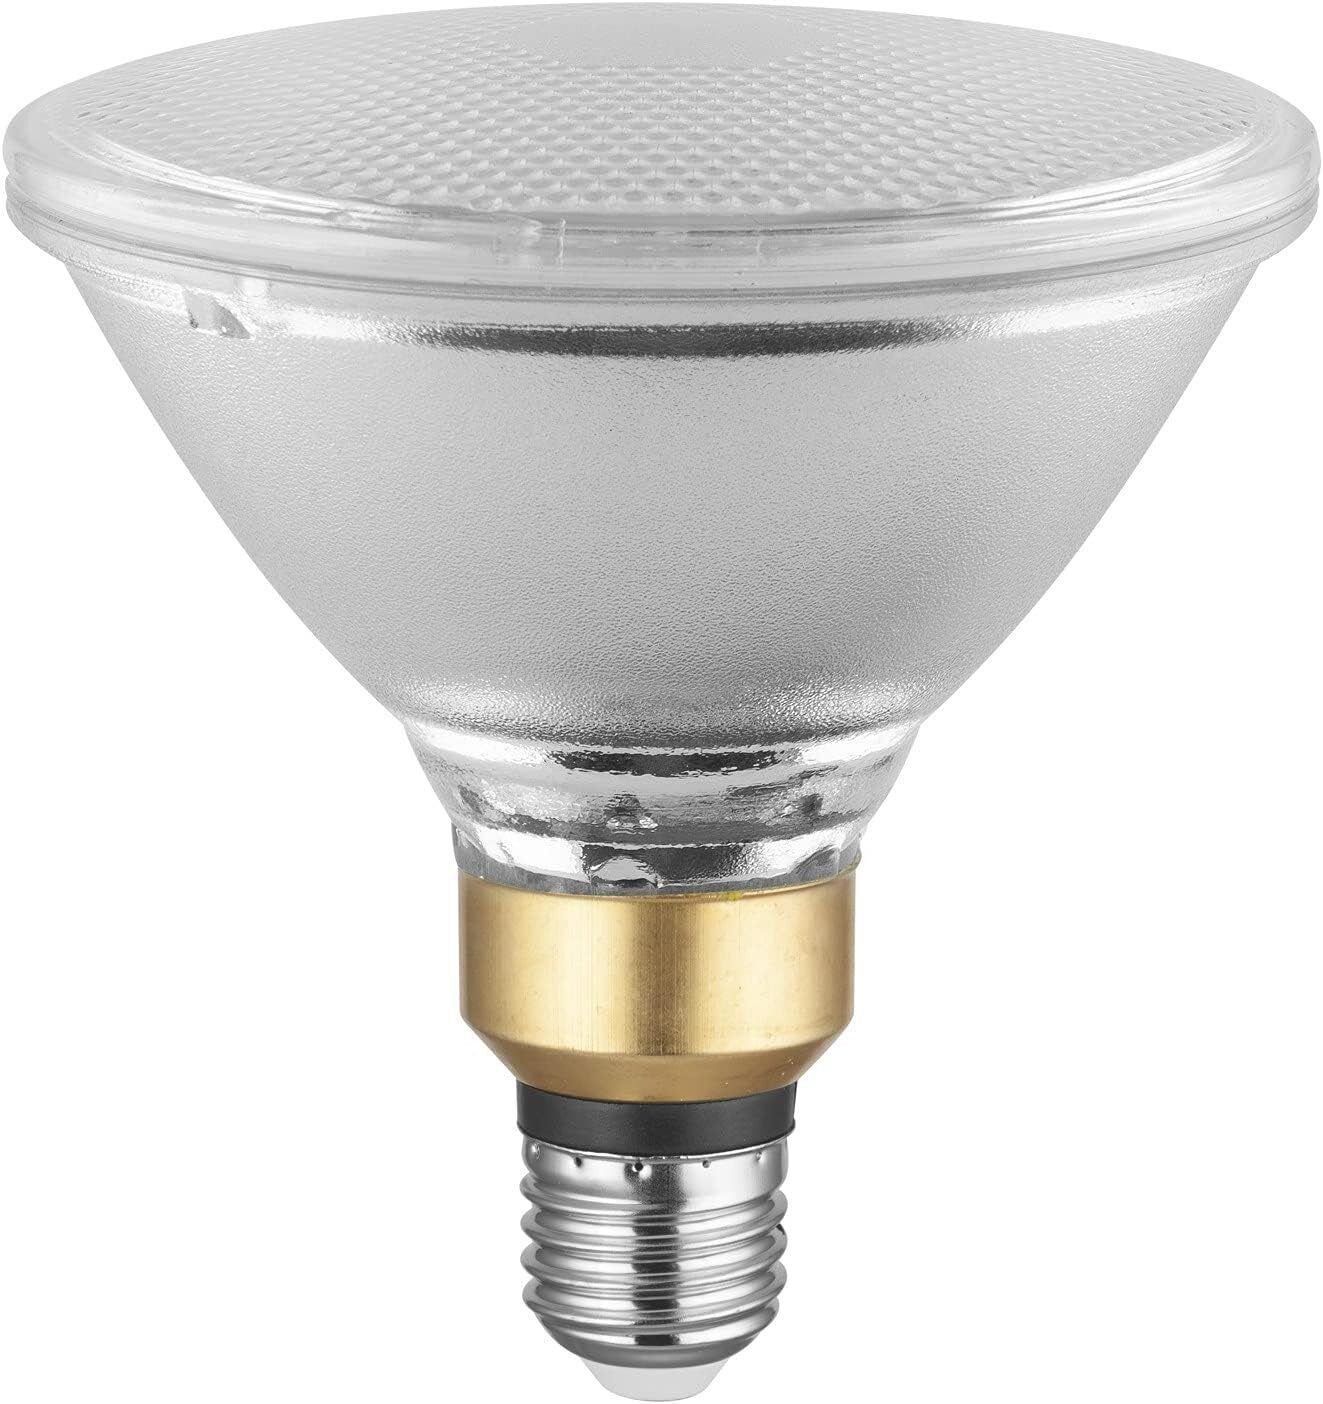 Osram LED Deckenspot E27 LED Parathom PAR38 Reflektor Lampe Warmweiß 12W Spot Glühbirne, LED fest integriert, Warmweiss, E27, nicht dimmbar, 15 Grad, Energieeffizient, IP65 | Deckenstrahler